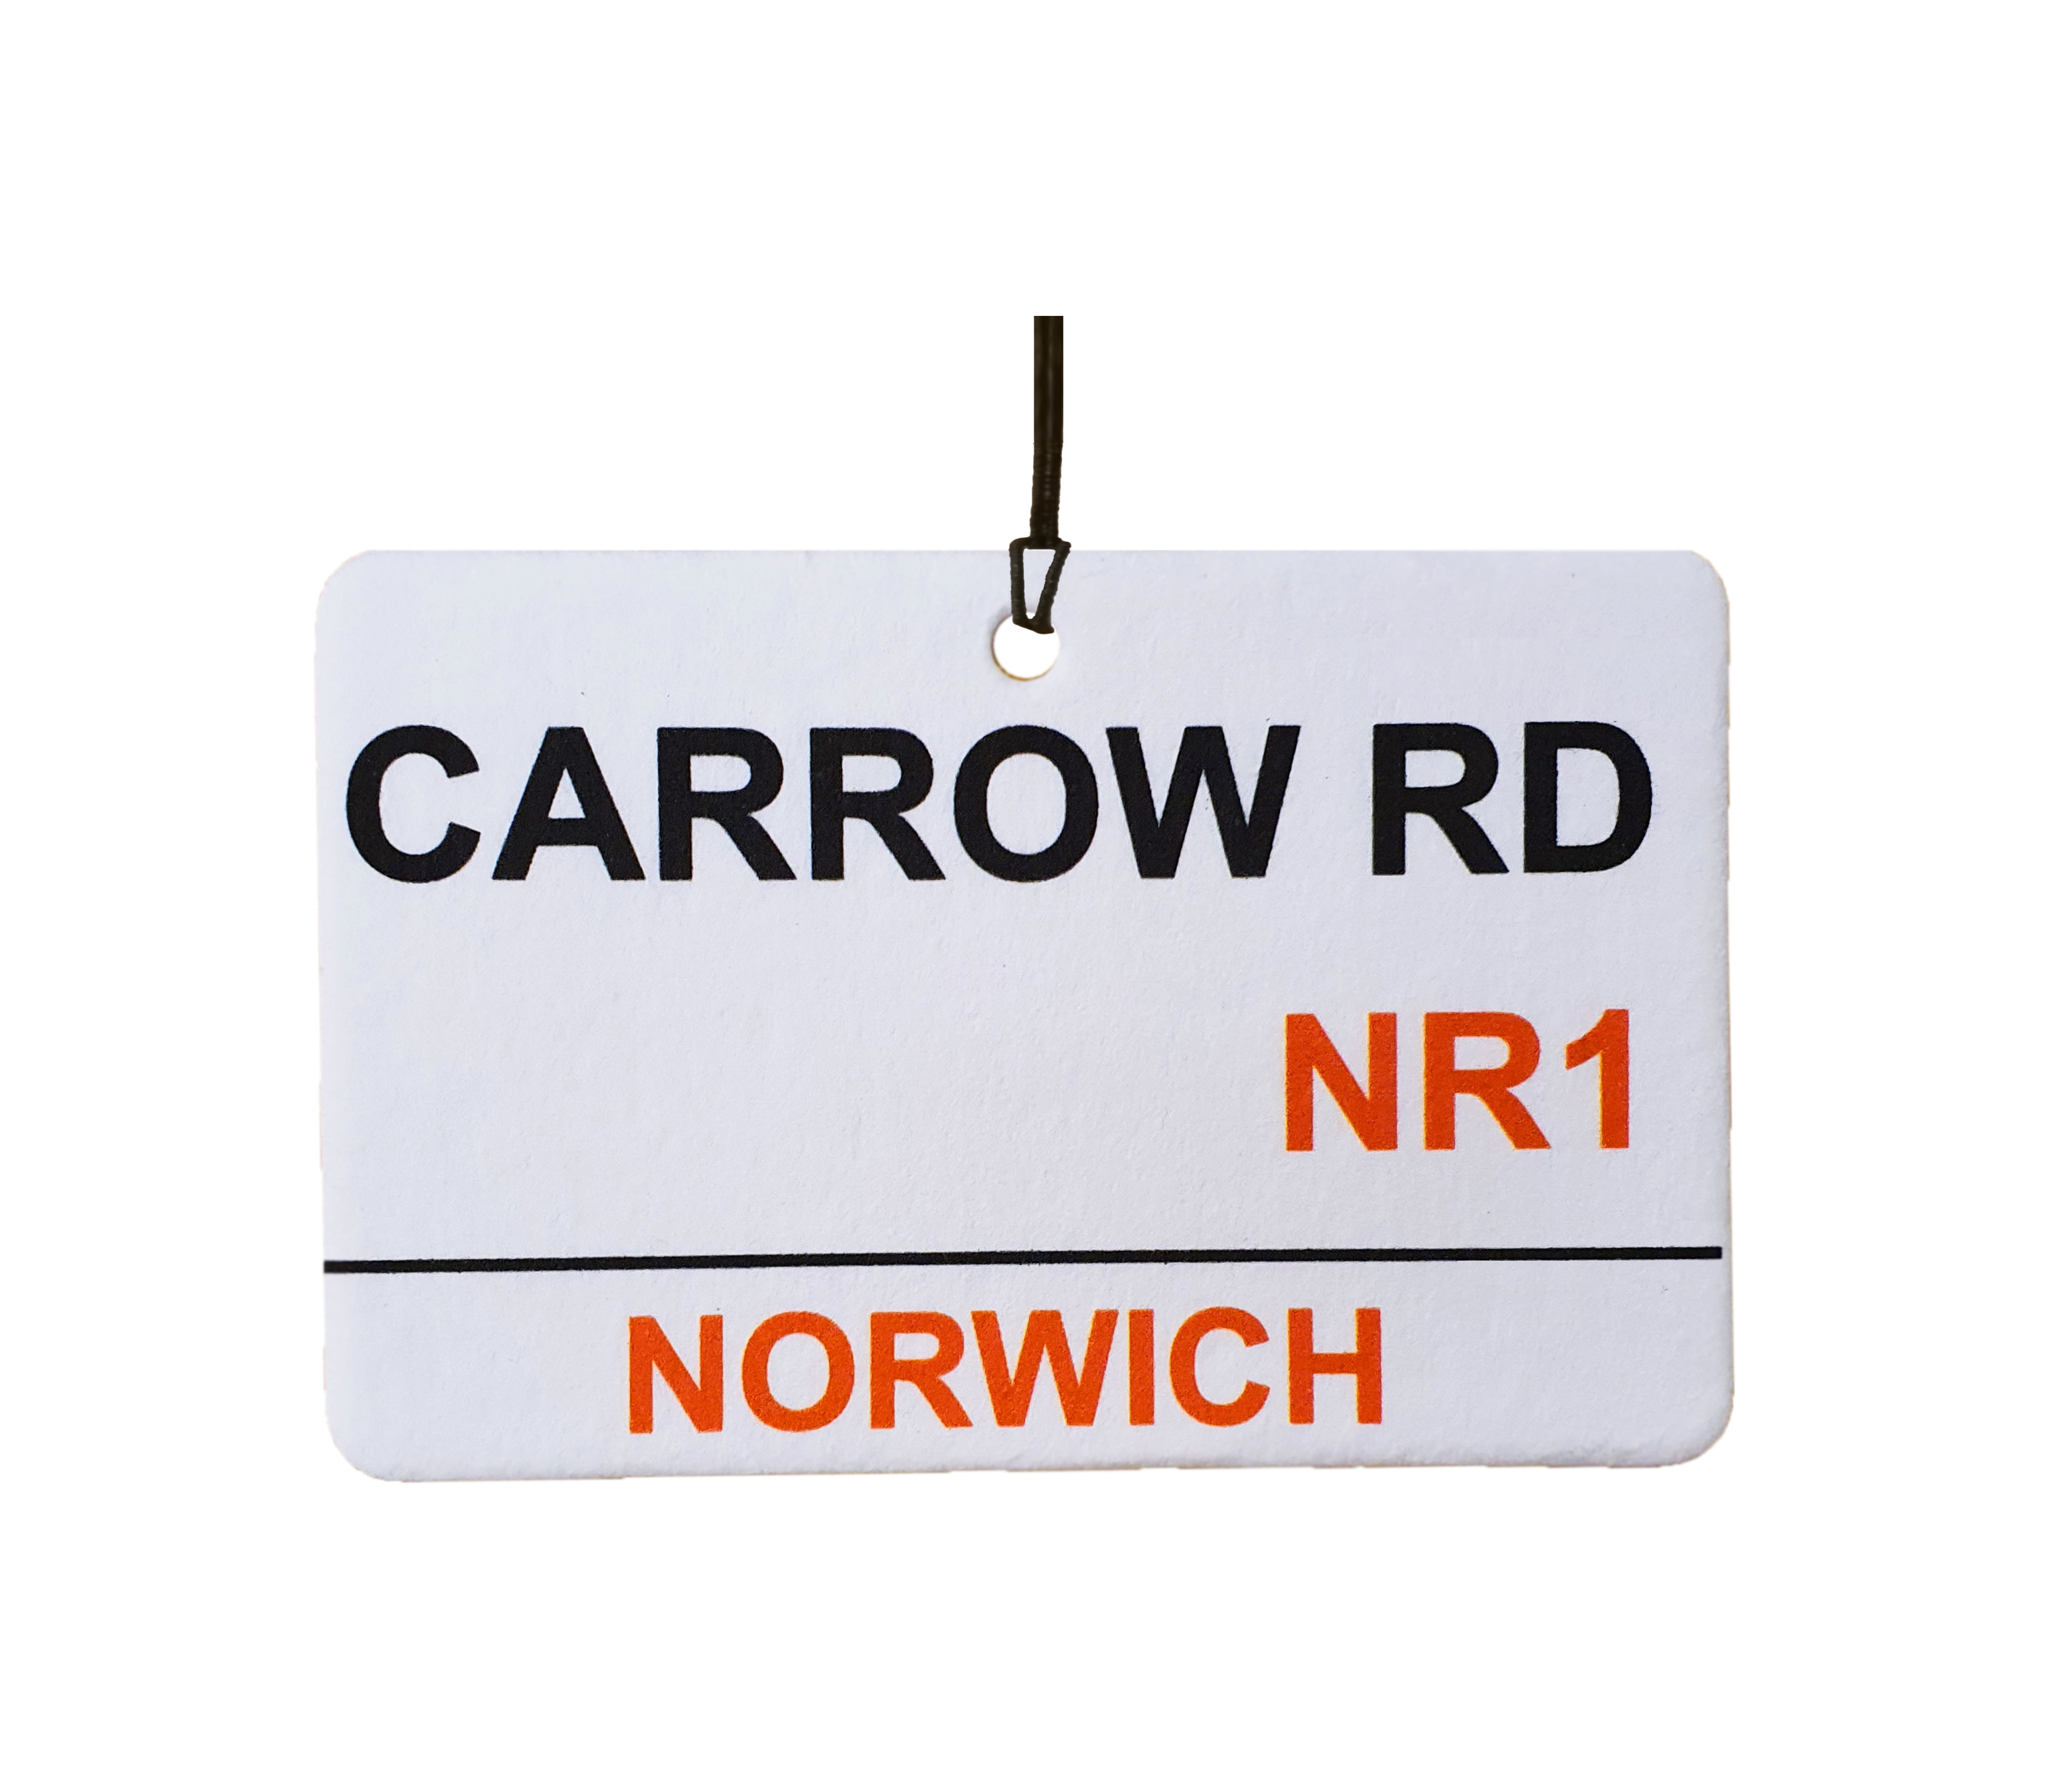 Norwich / Carrow Rd Street Sign